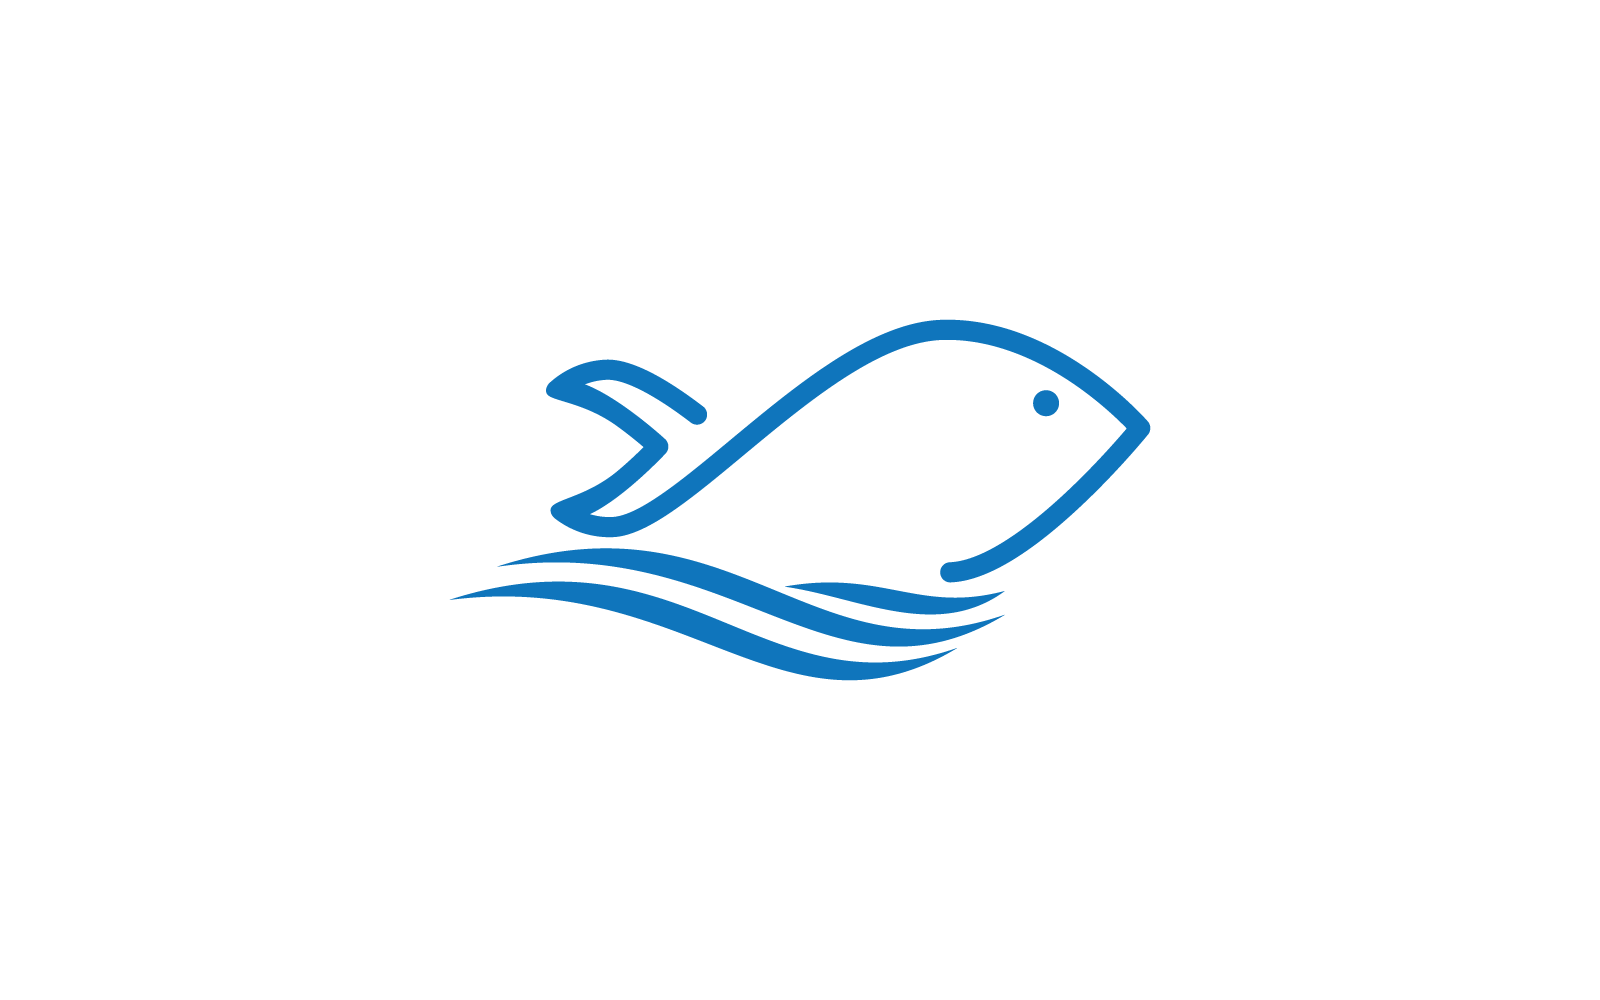 Fish illustration logo design icon template